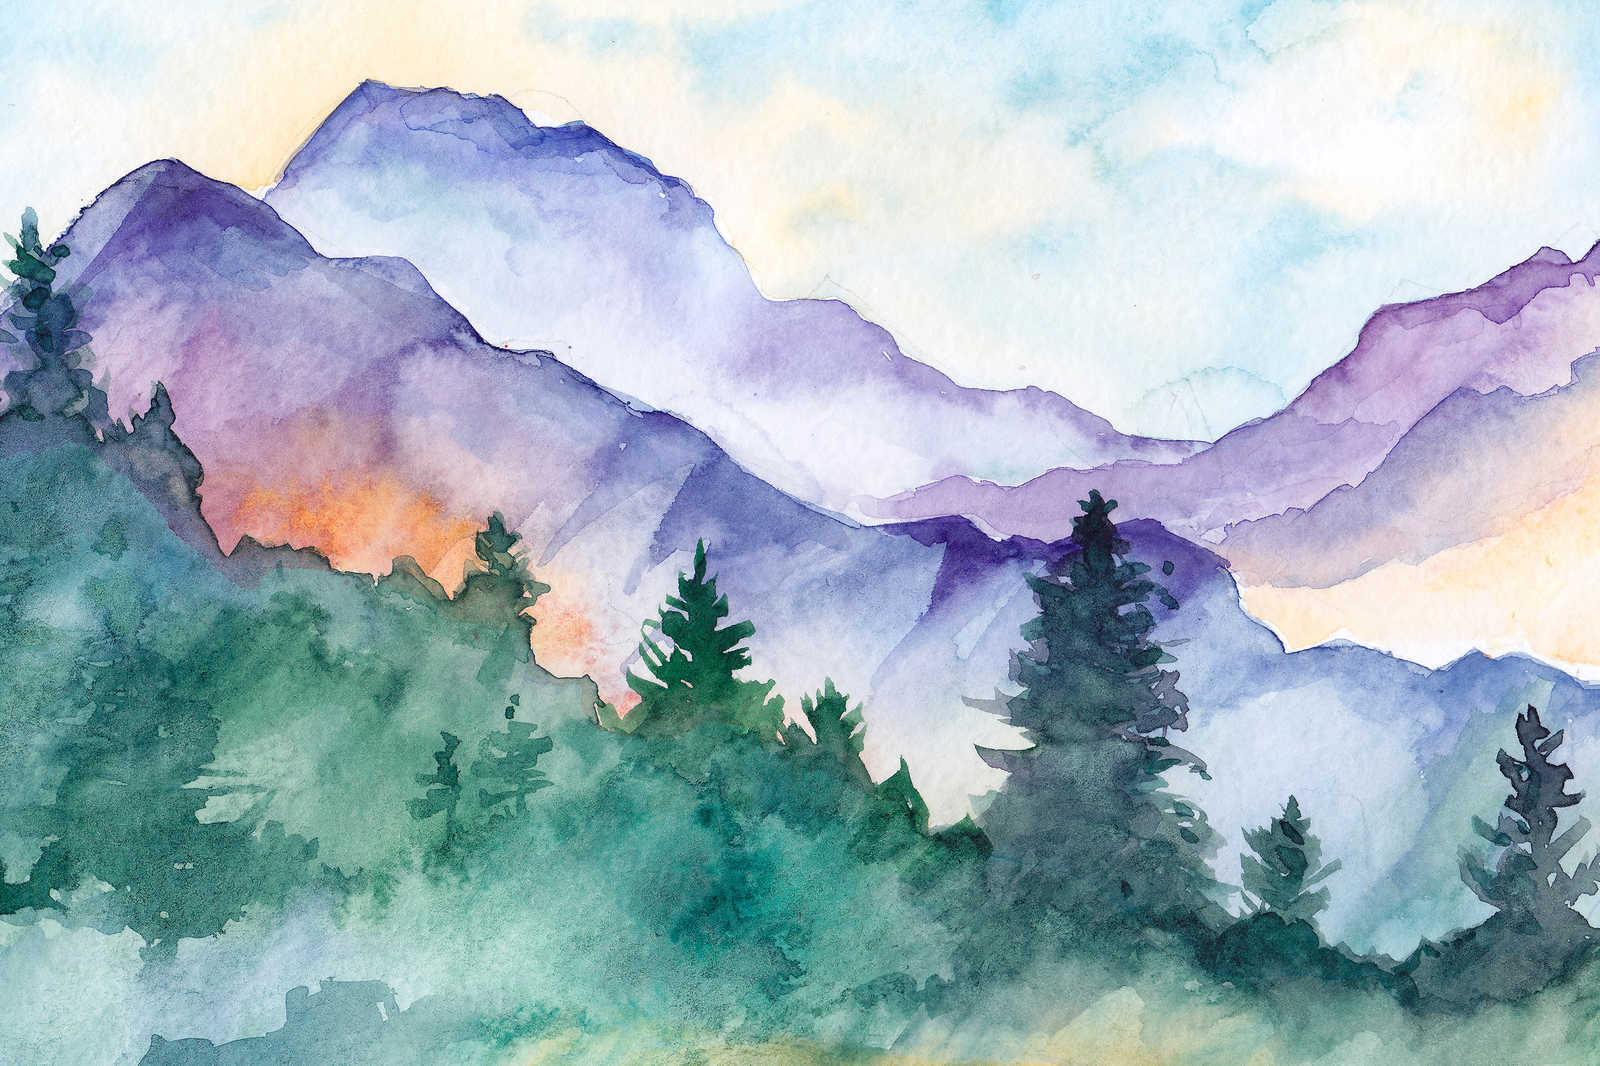             Lienzo paisaje de montaña pintado con acuarelas - 0,90 m x 0,60 m
        